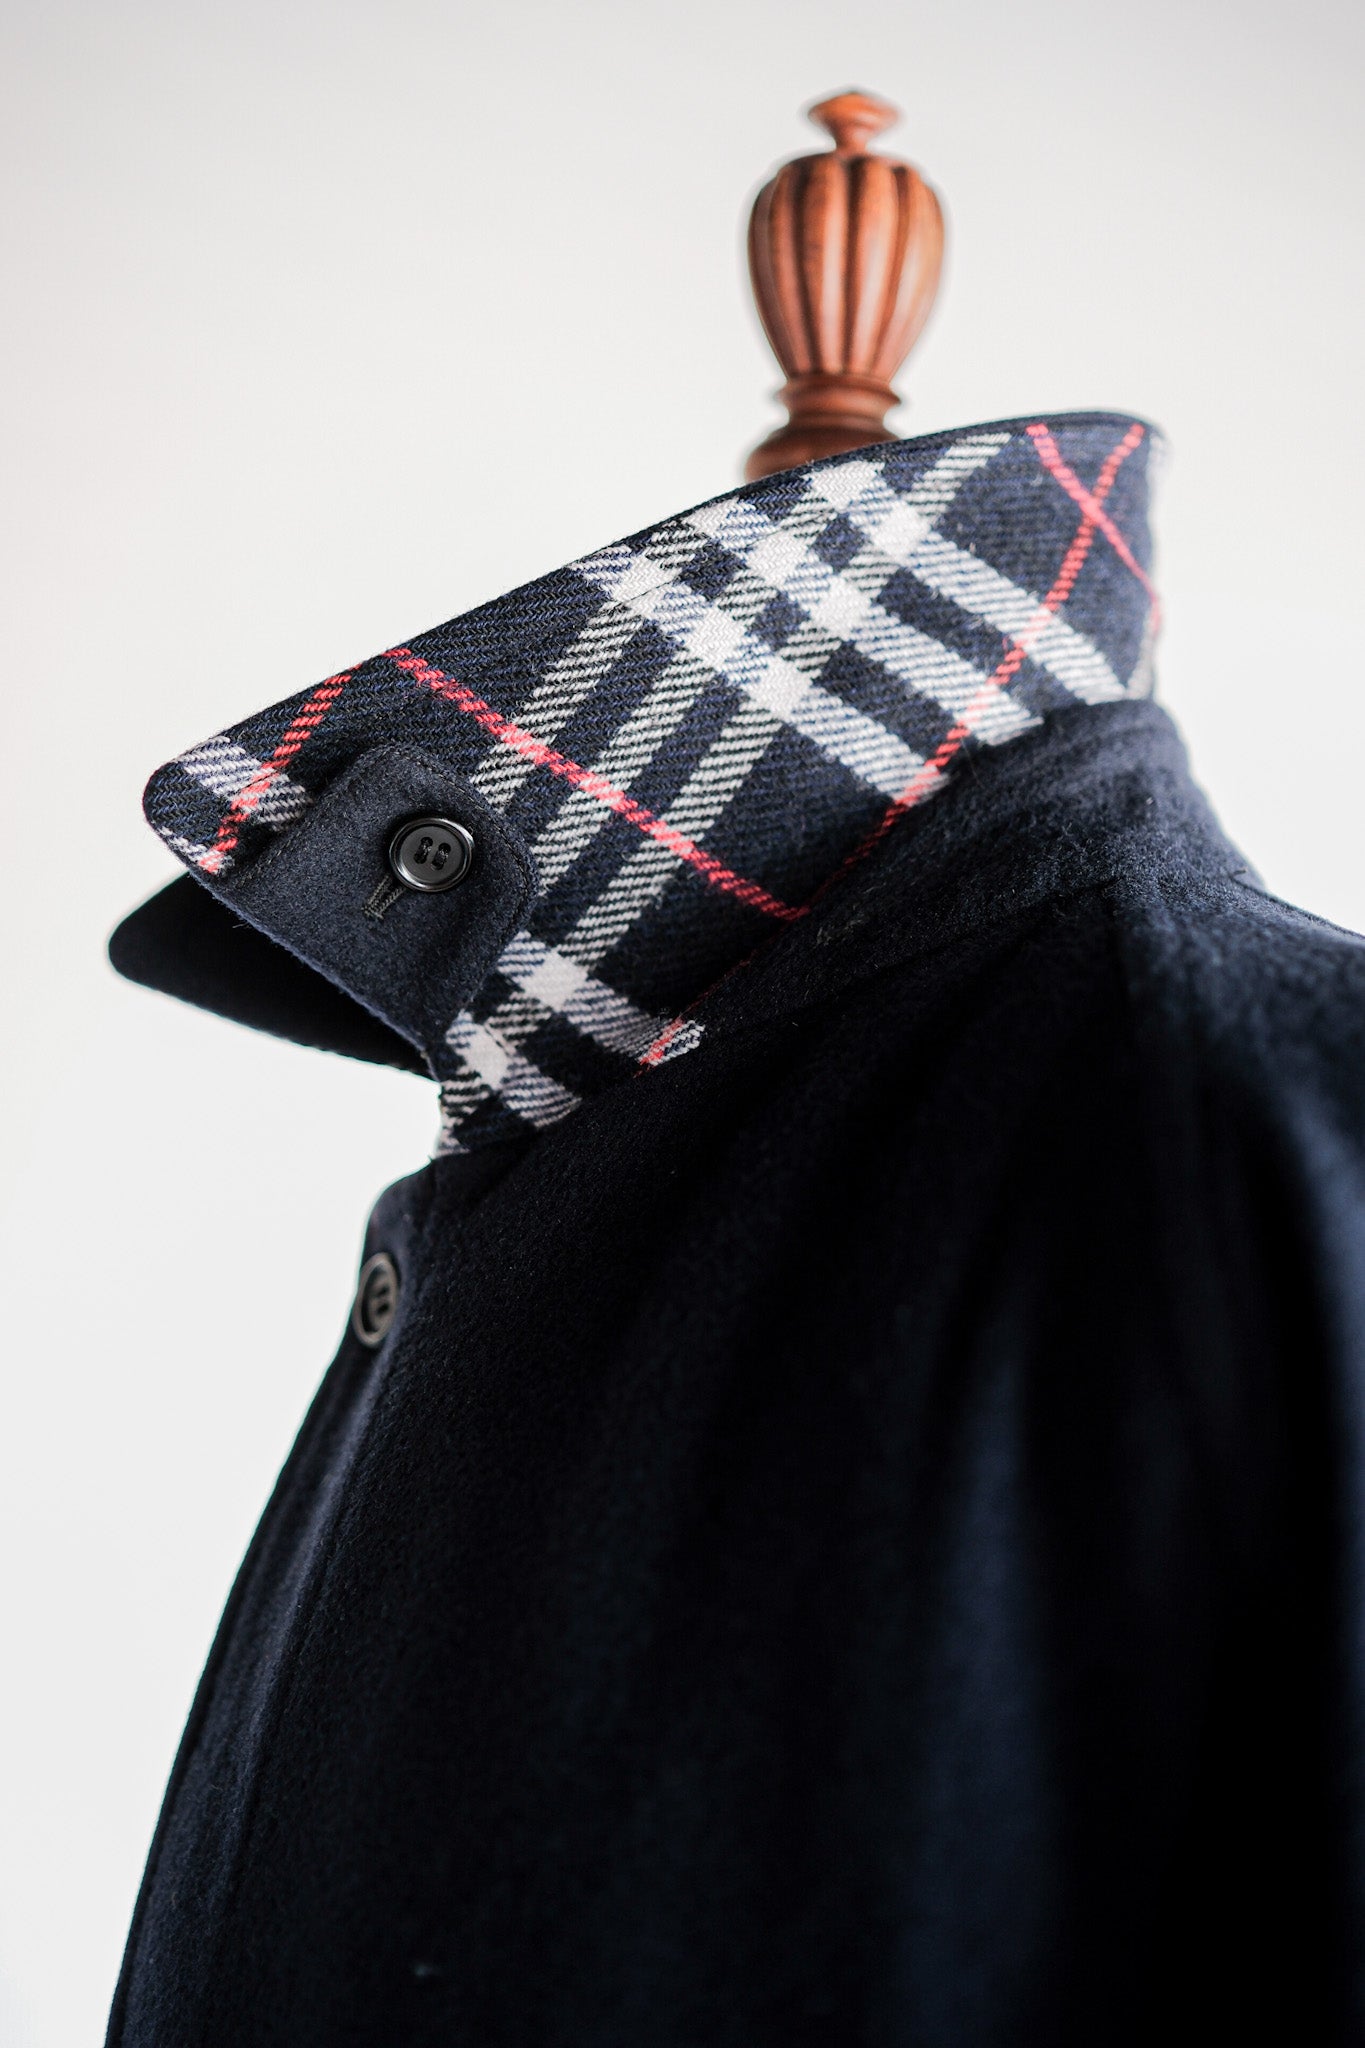 [~ 80's] Vintage Burberrys Single Raglen Wool & Alpaca Balmacaan Belted Coat with chan Strap Size "Hespen Mode-Sport Bremen.